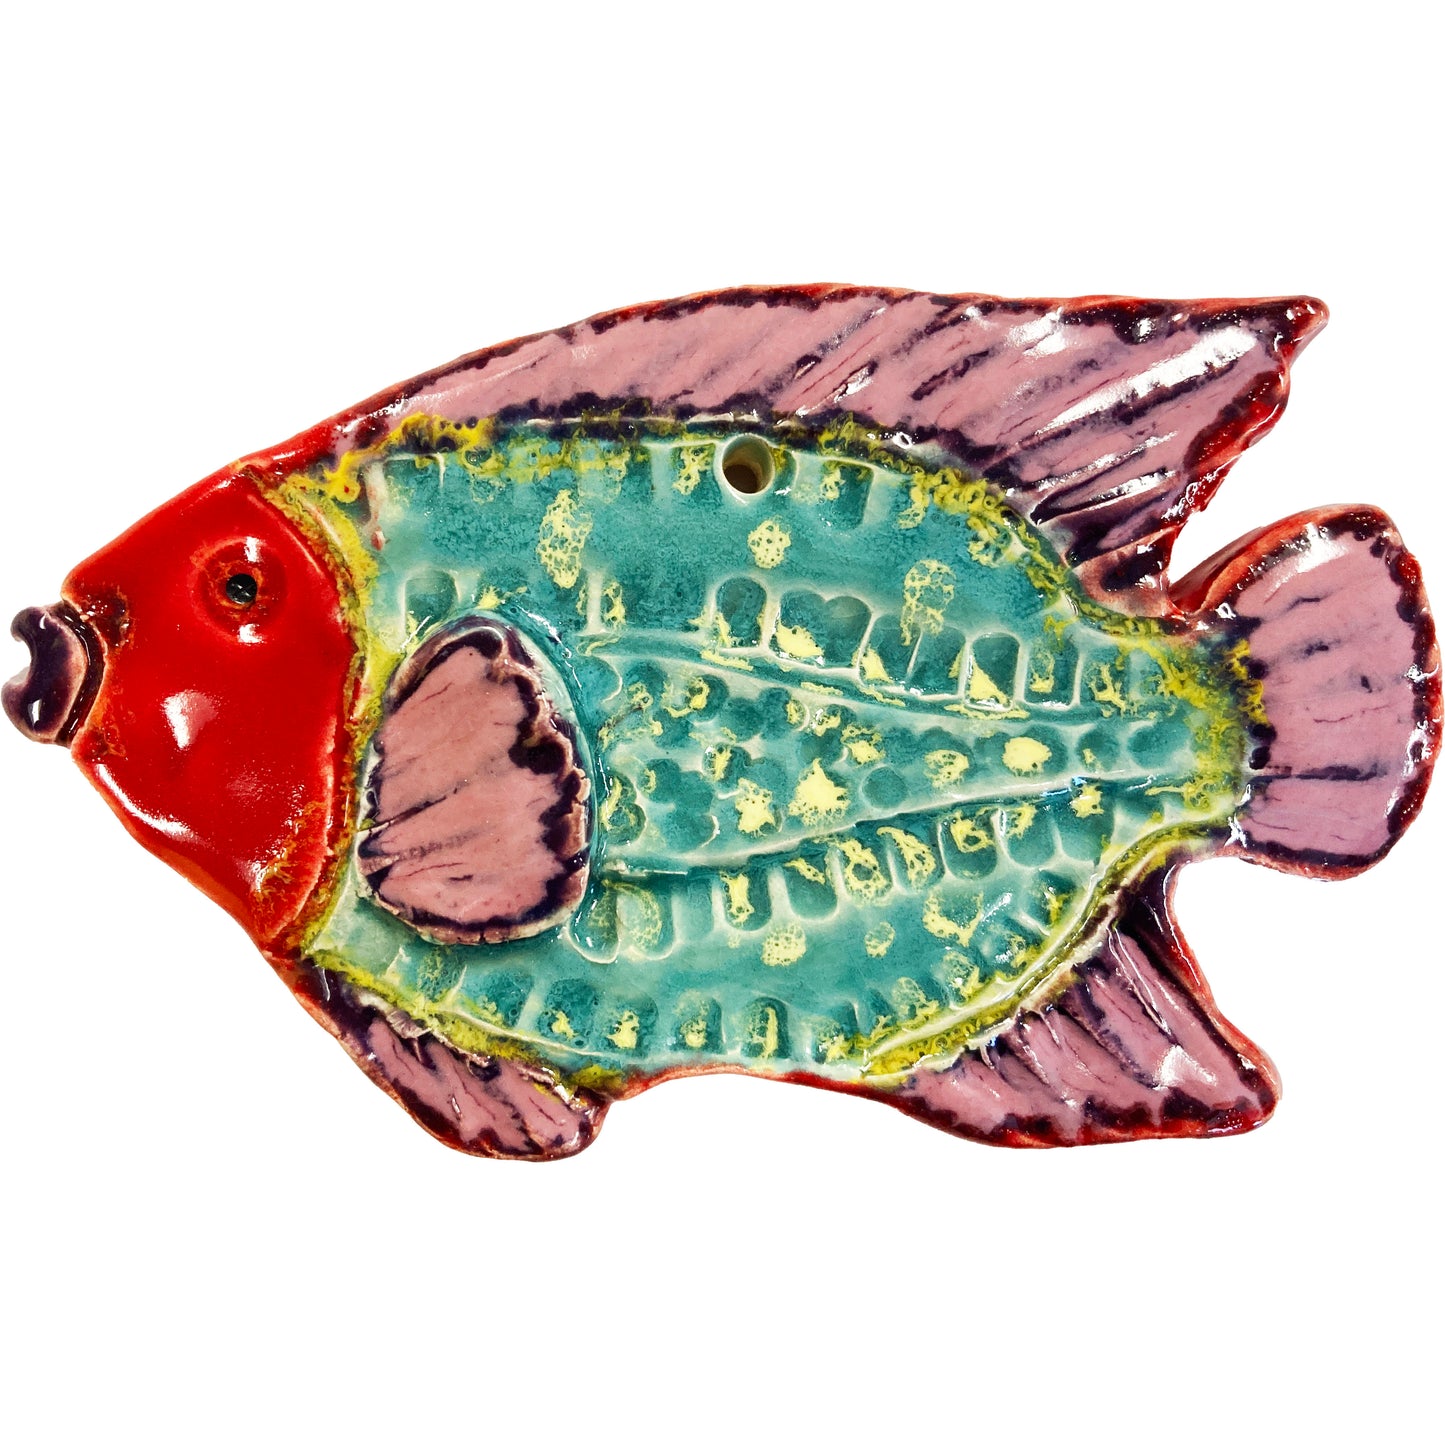 Ceramic Arts Handmade Clay Crafts Fresh Fish 5-inch x 3-inch Glazed by Jennifer Horne